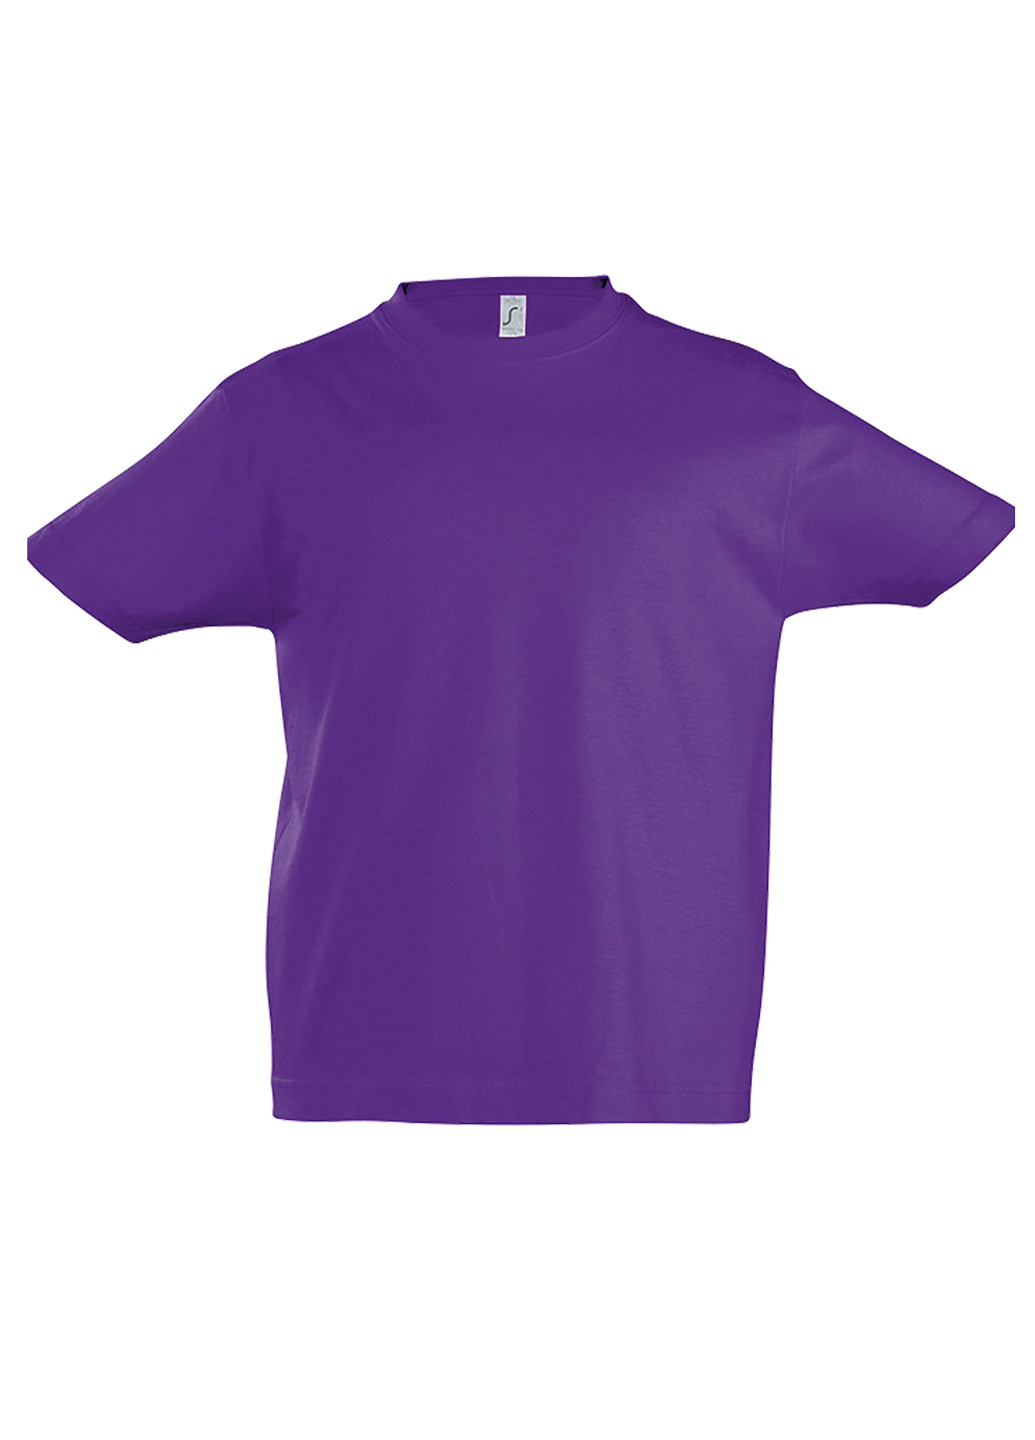 Фиолетовая летняя футболка с коротким рукавом Sol's